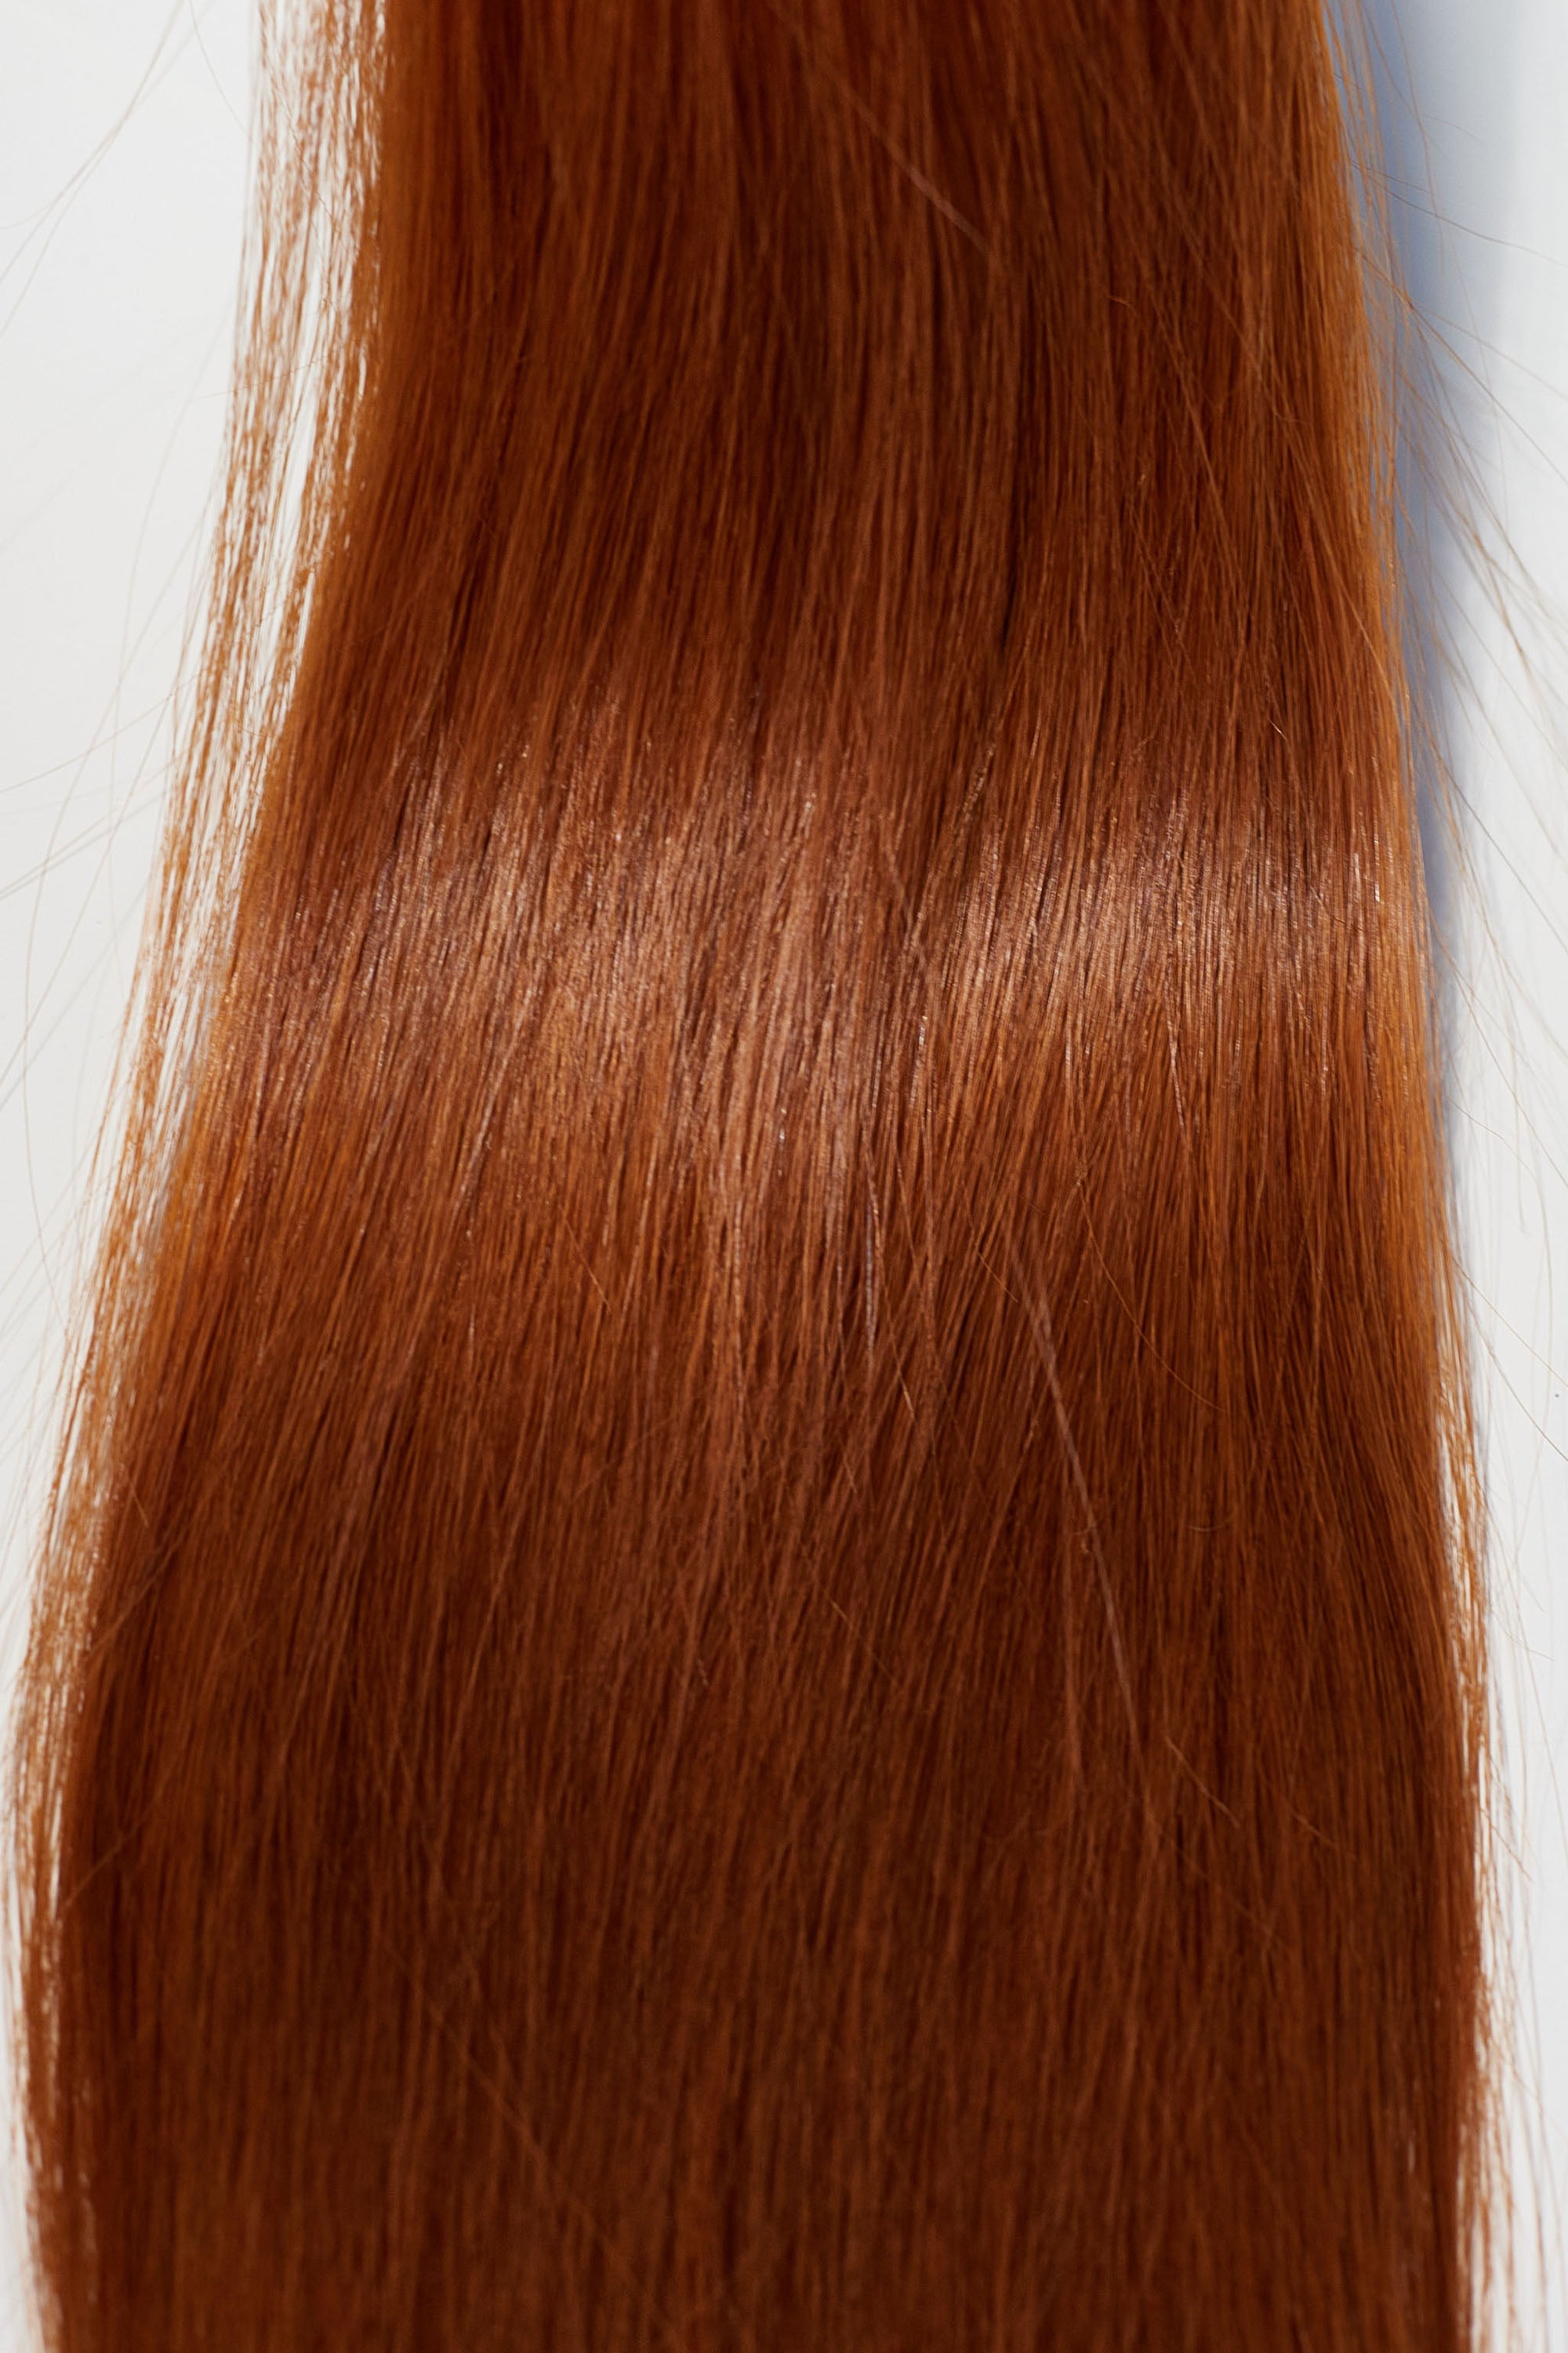 Behair professional Keratin Tip "Premium" 24" (60cm) Natural Straight Brilliant Copper #130 - 25g (Micro - 0.5g each pcs) hair extensions